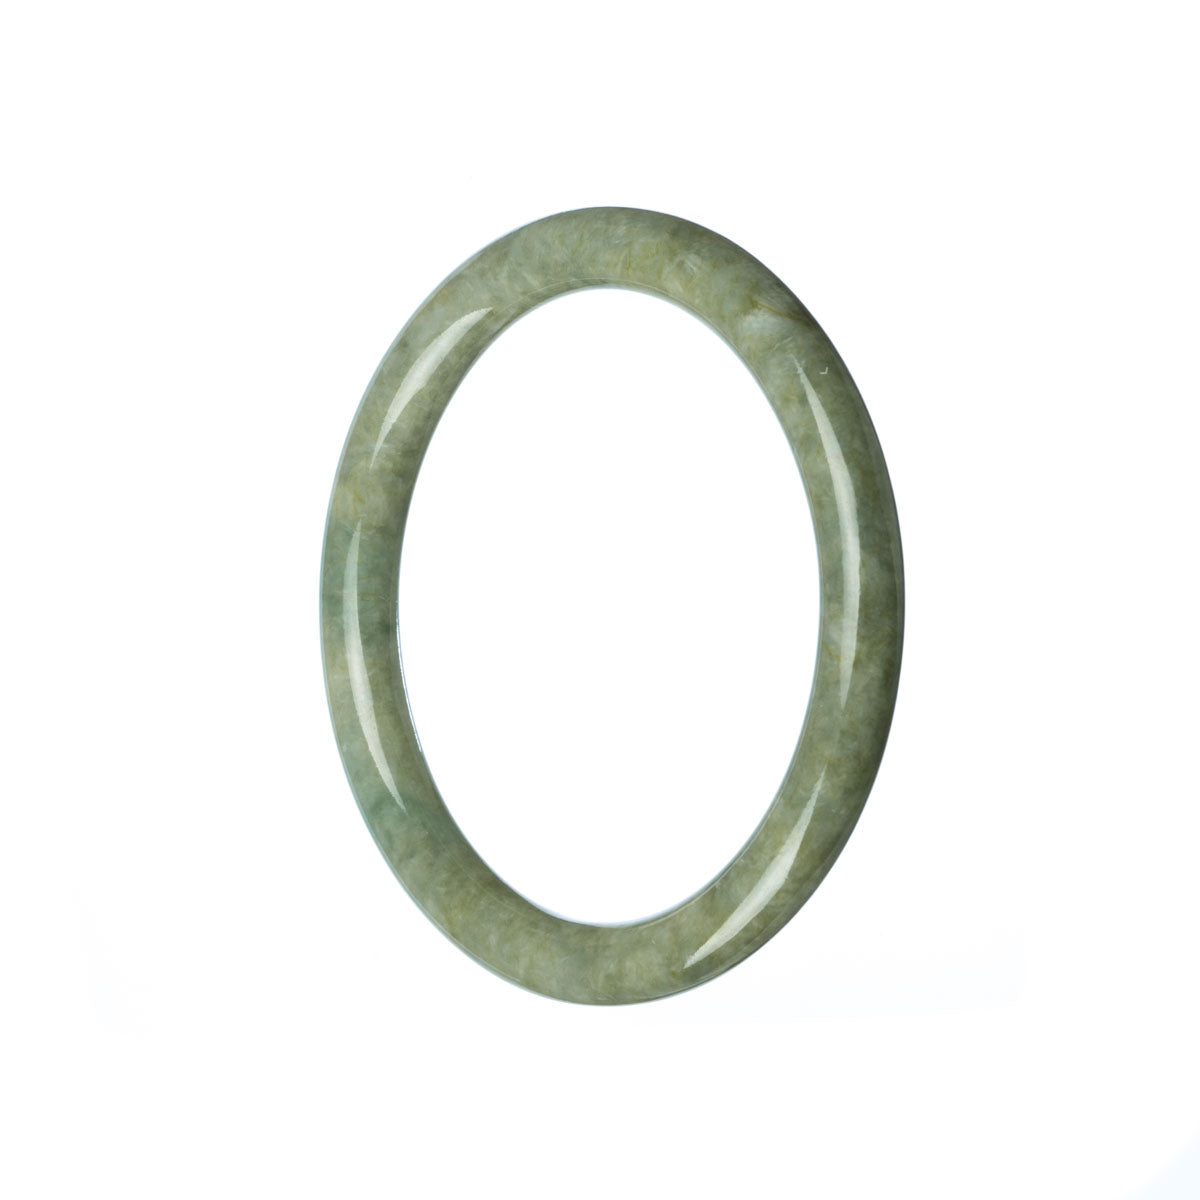 Image of a small round jade bangle, certified Grade A Green Burmese Jade.